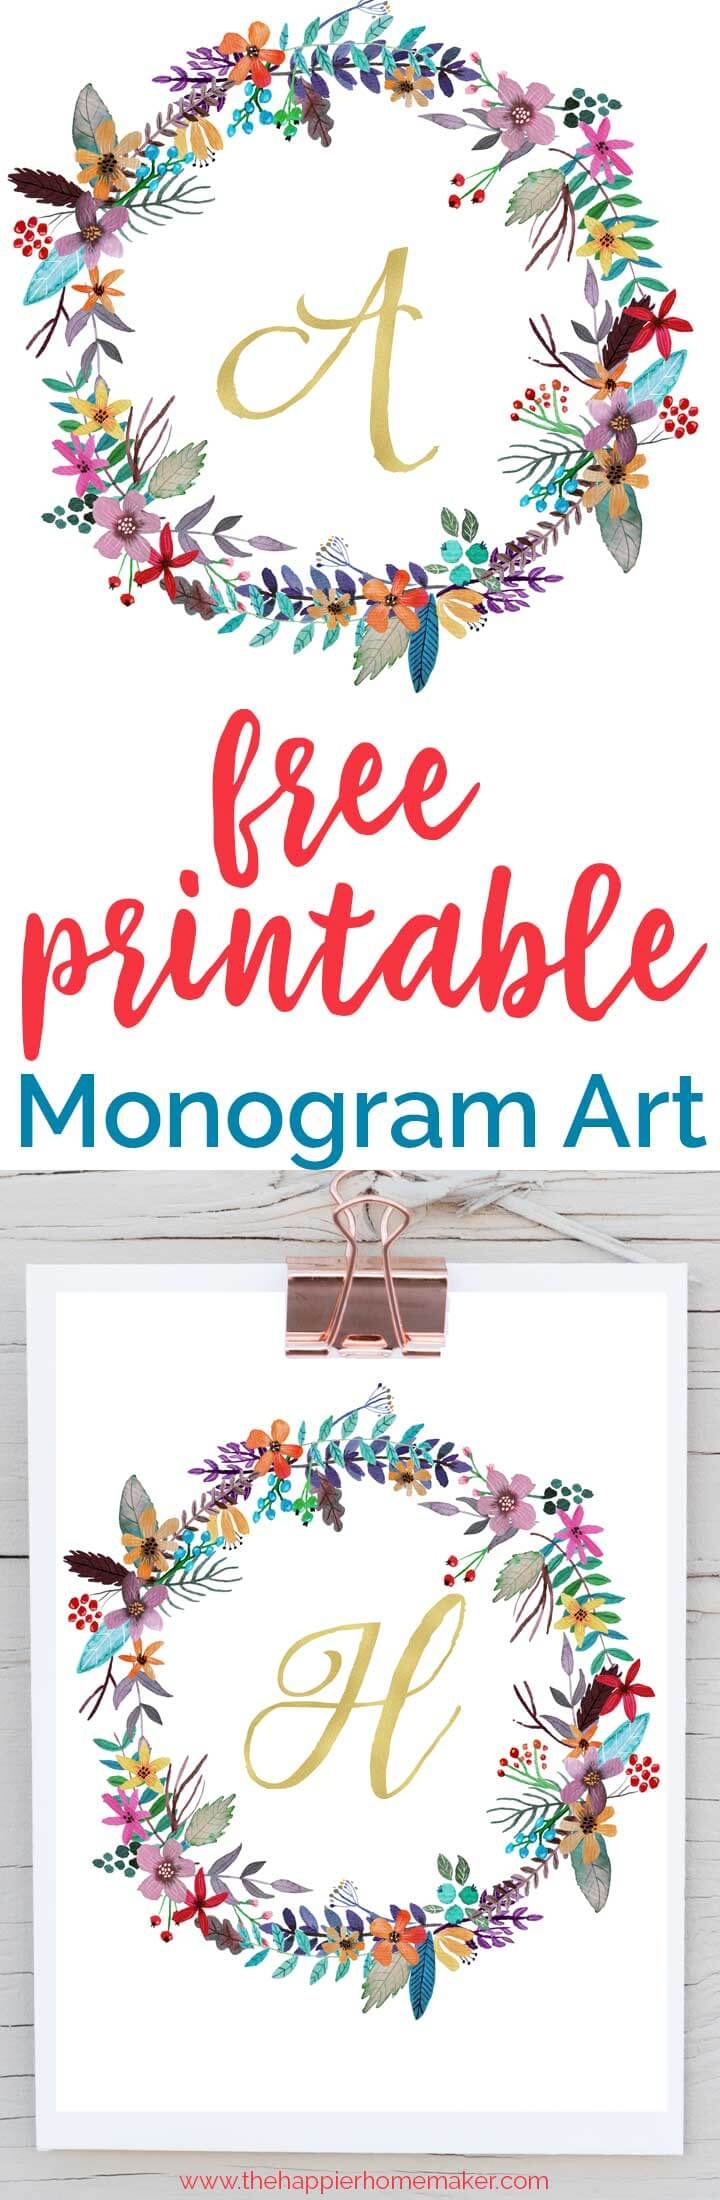 Free Printable Monogram Art | The Happier Homemaker - Free Printable Monogram Letters